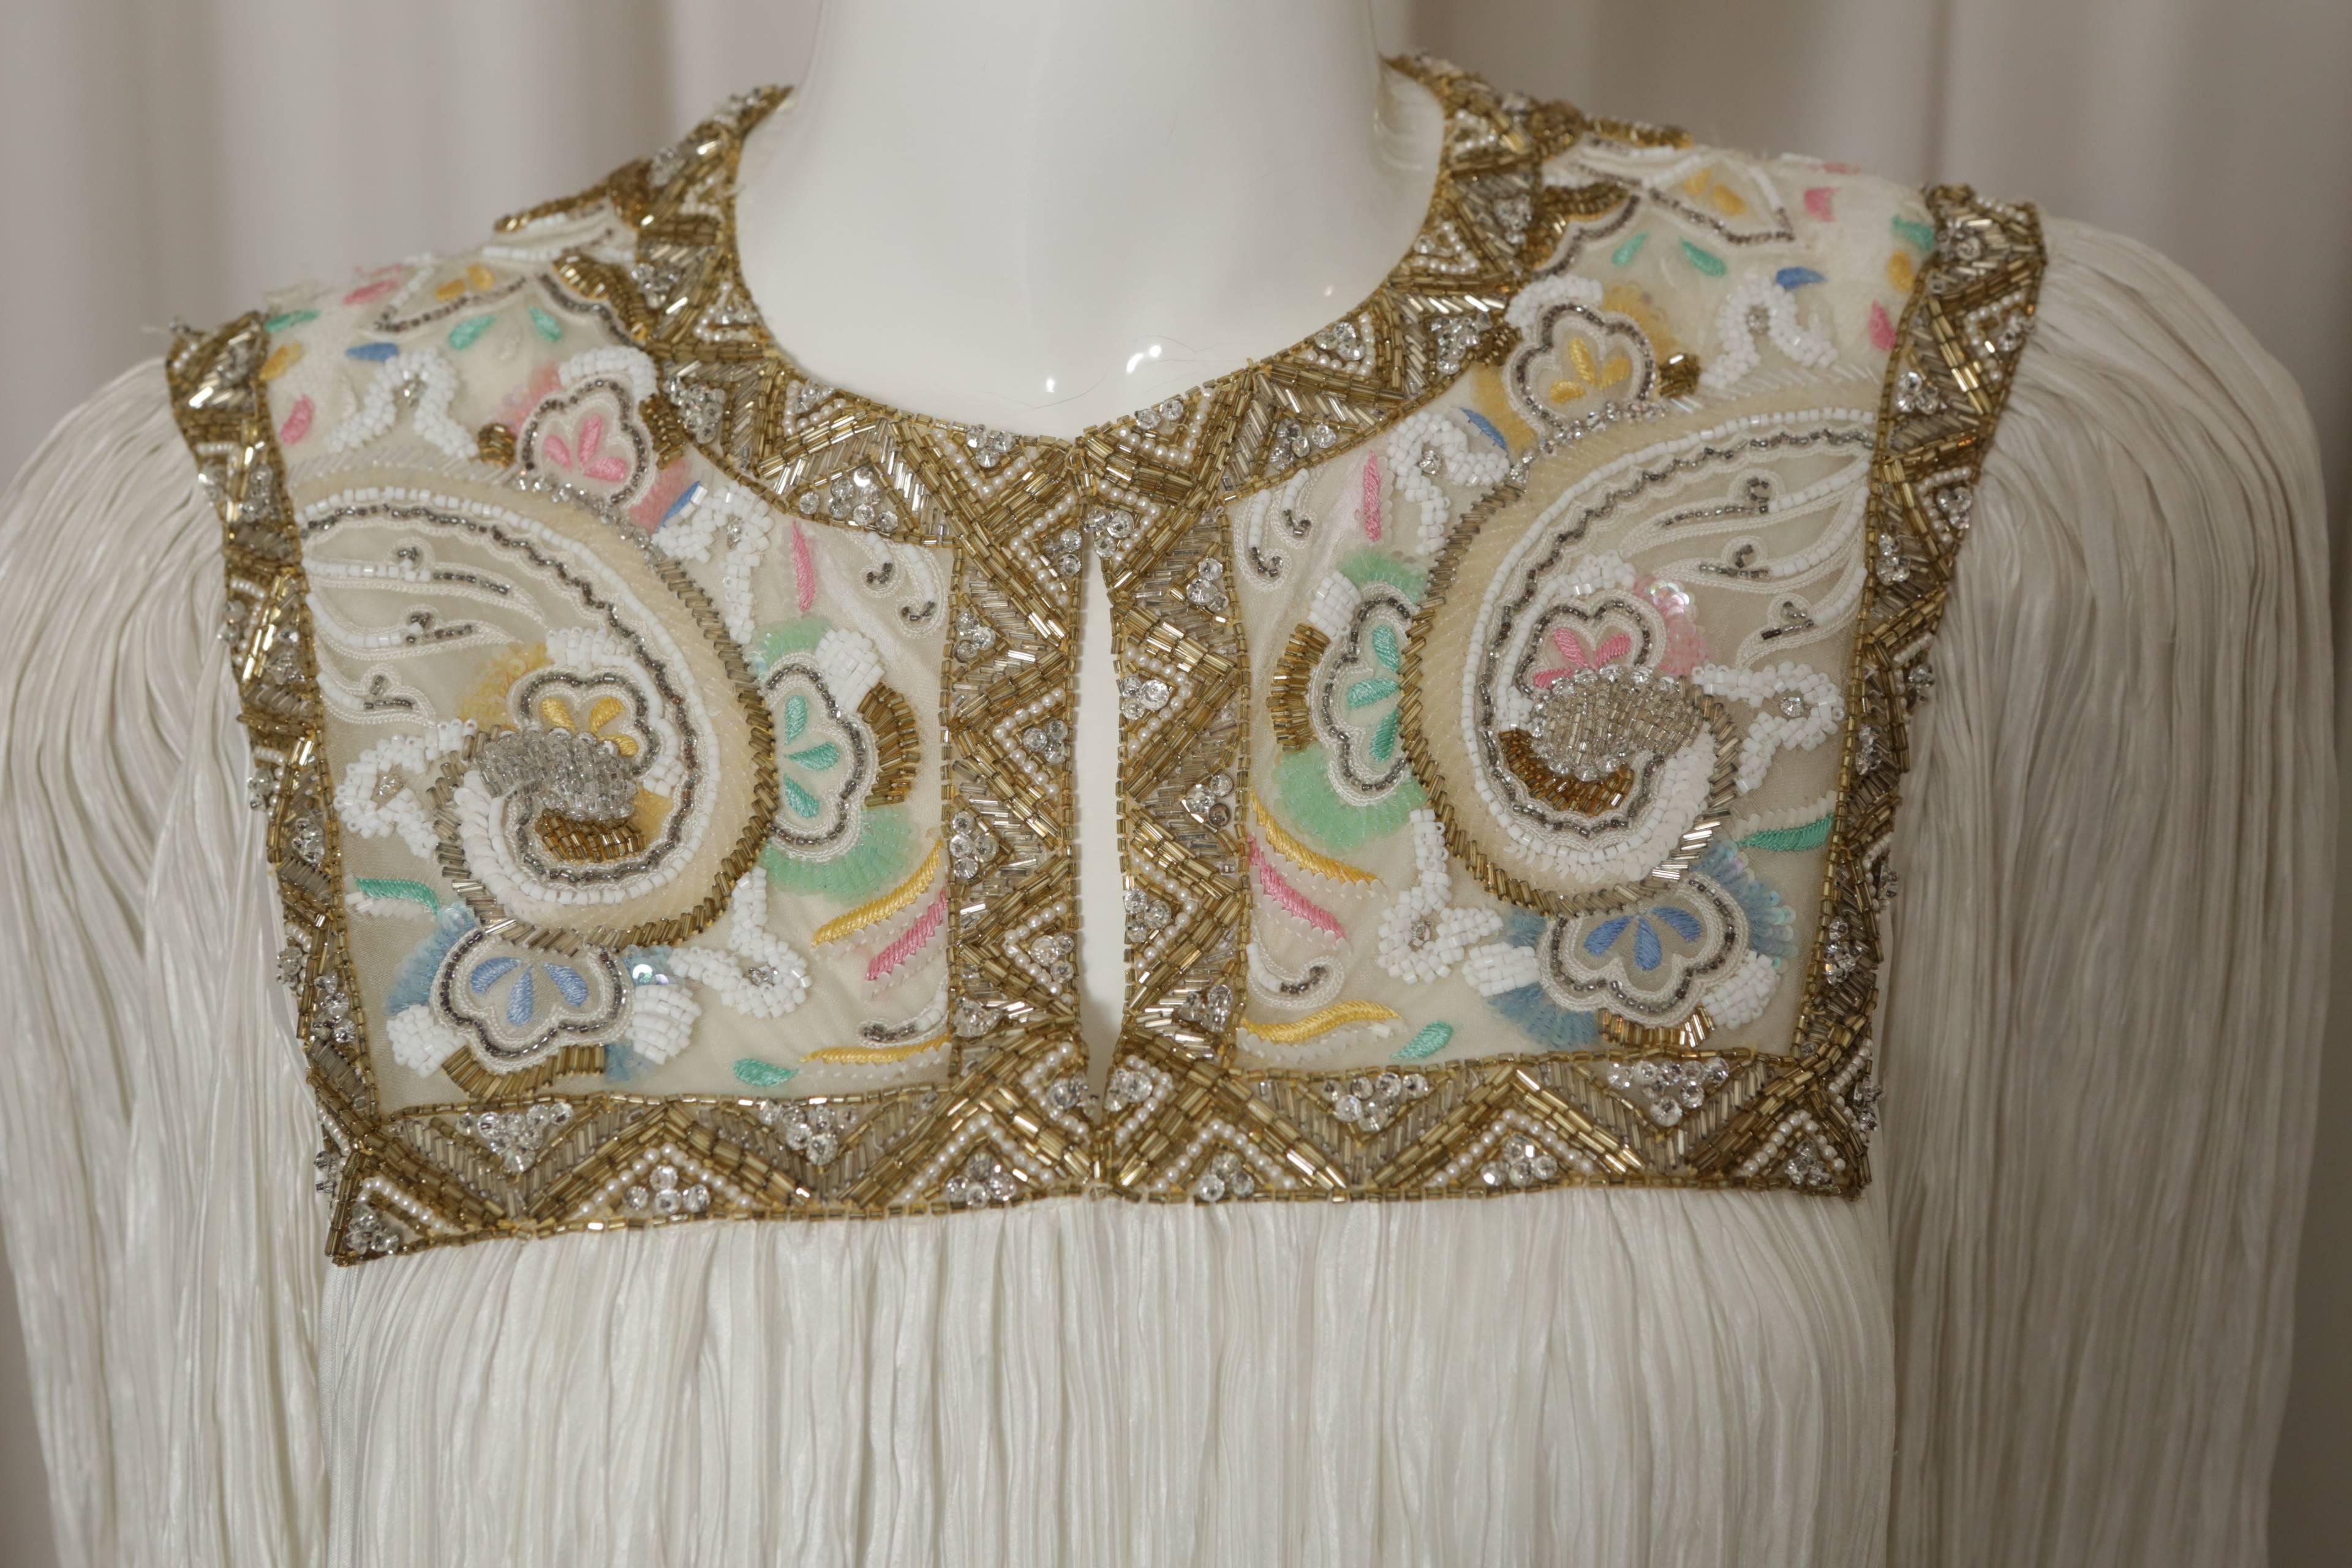 Mary McFadden short sleeve ivory/multi pleated dress w/ split 'V' & multi colored beading.

*S